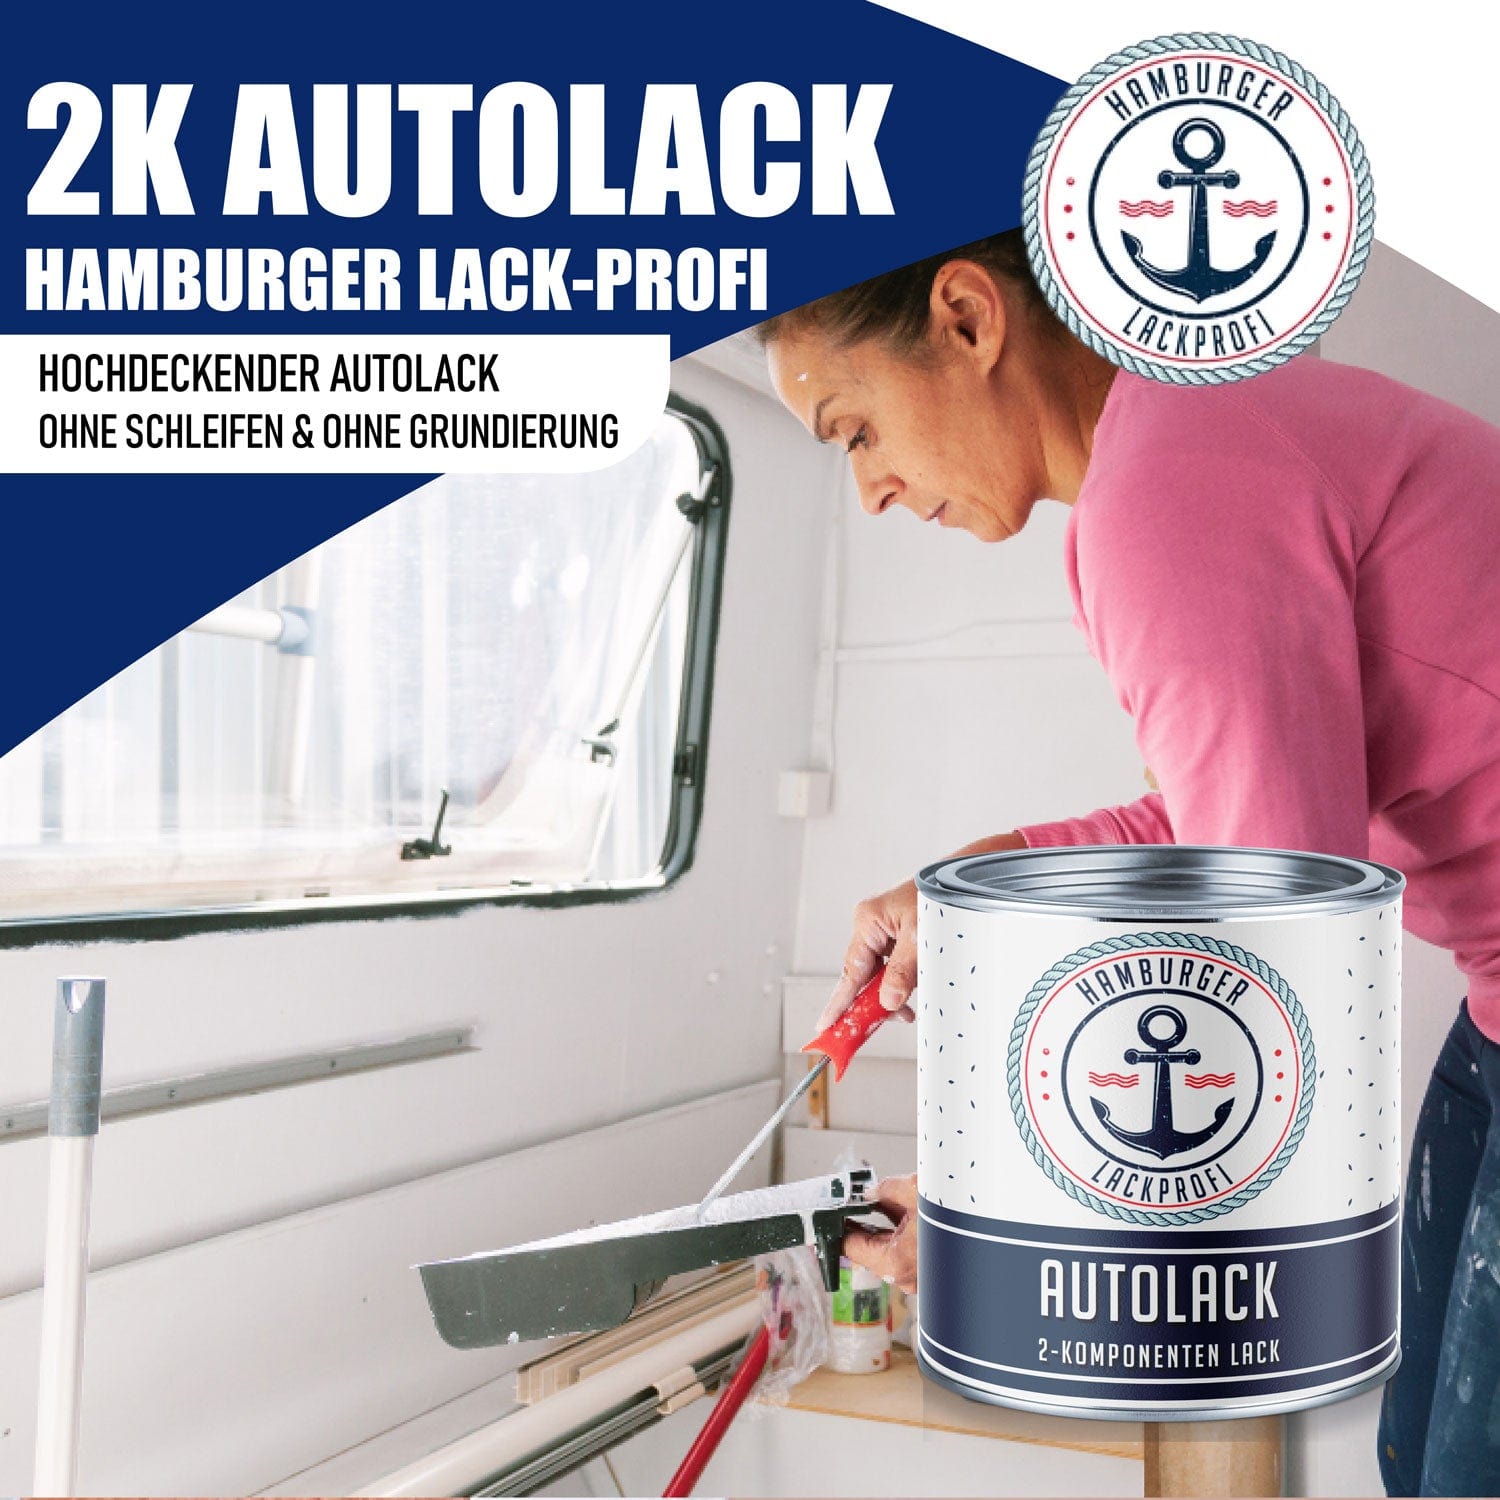 Hamburger Lack-Profi Lacke & Beschichtungen Hamburger Lack-Profi 2K Autolack in Weinrot RAL 3005 mit Lackierset (X300) & Verdünnung (1 L) - 30% Sparangebot